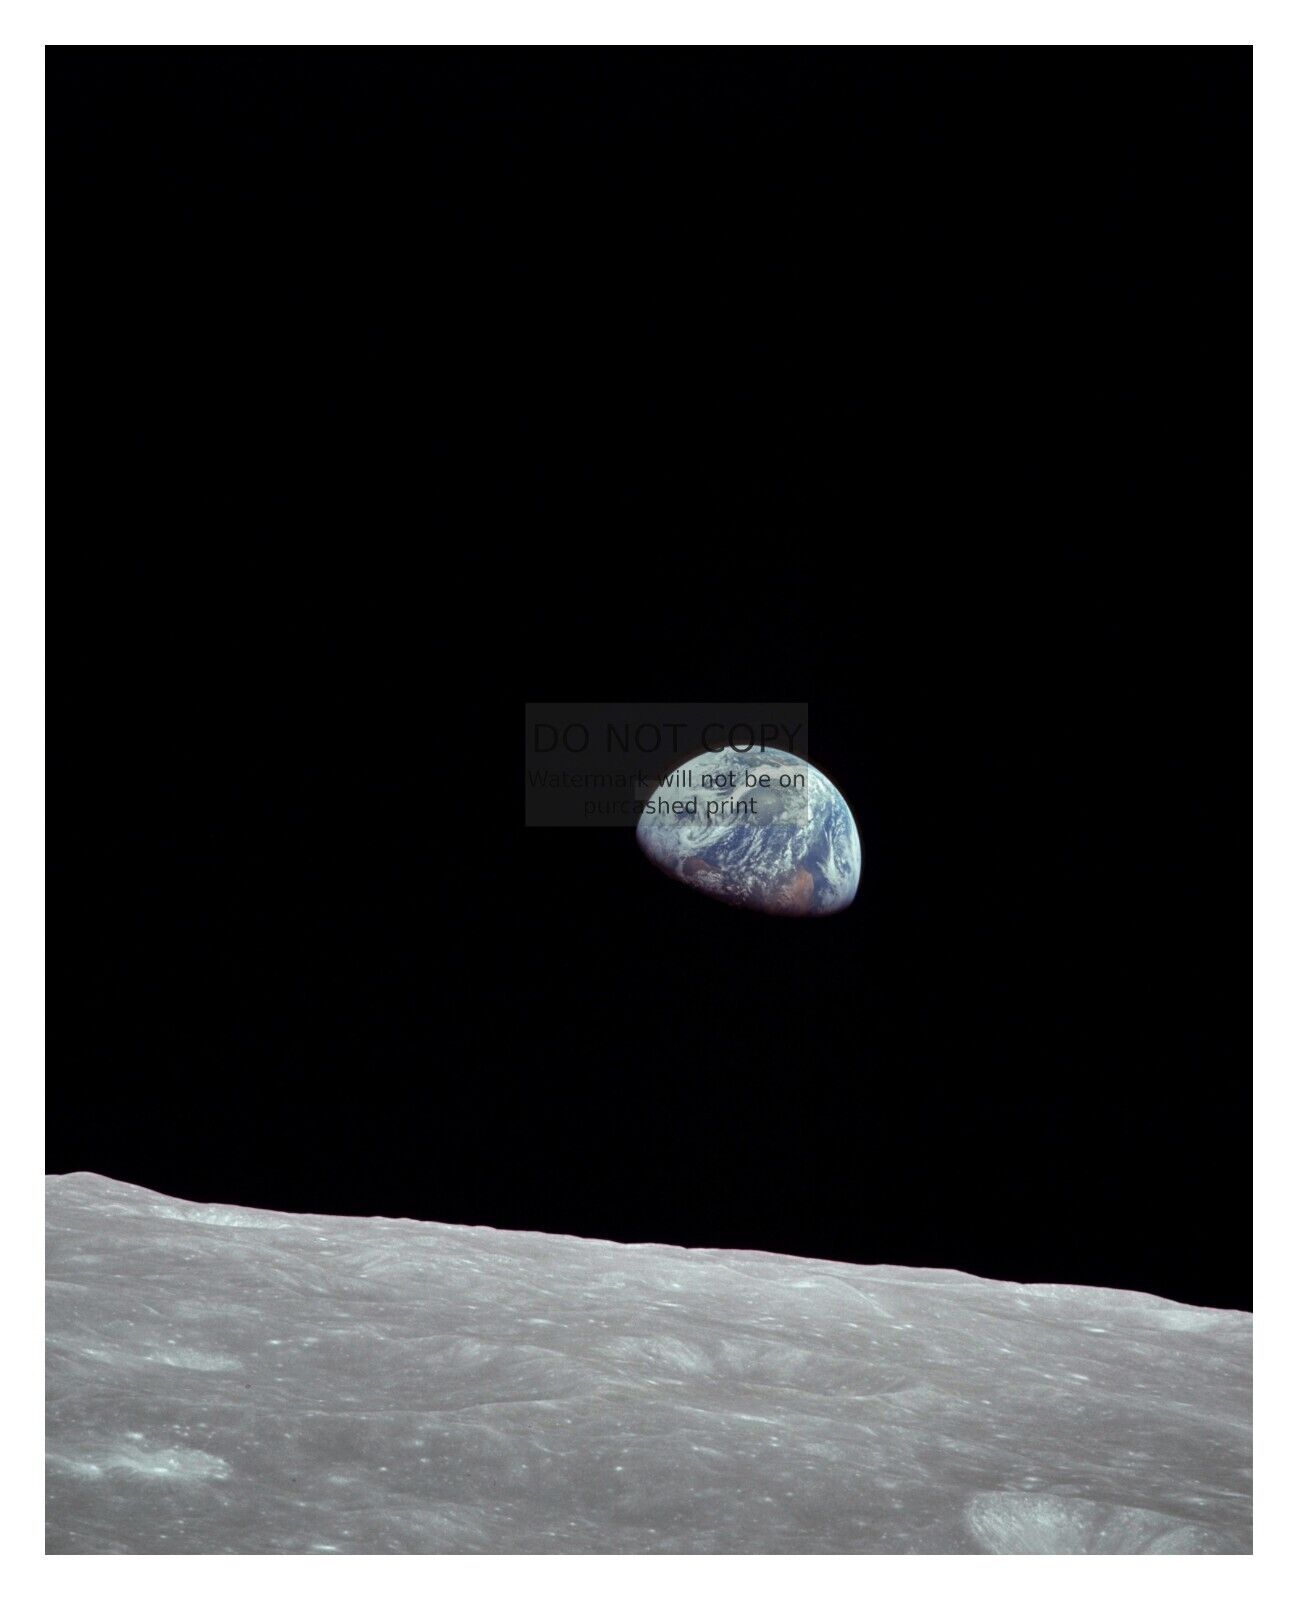 APOLLO 8 EARTHRISE FROM THE MOON 8X10 NASA PHOTO